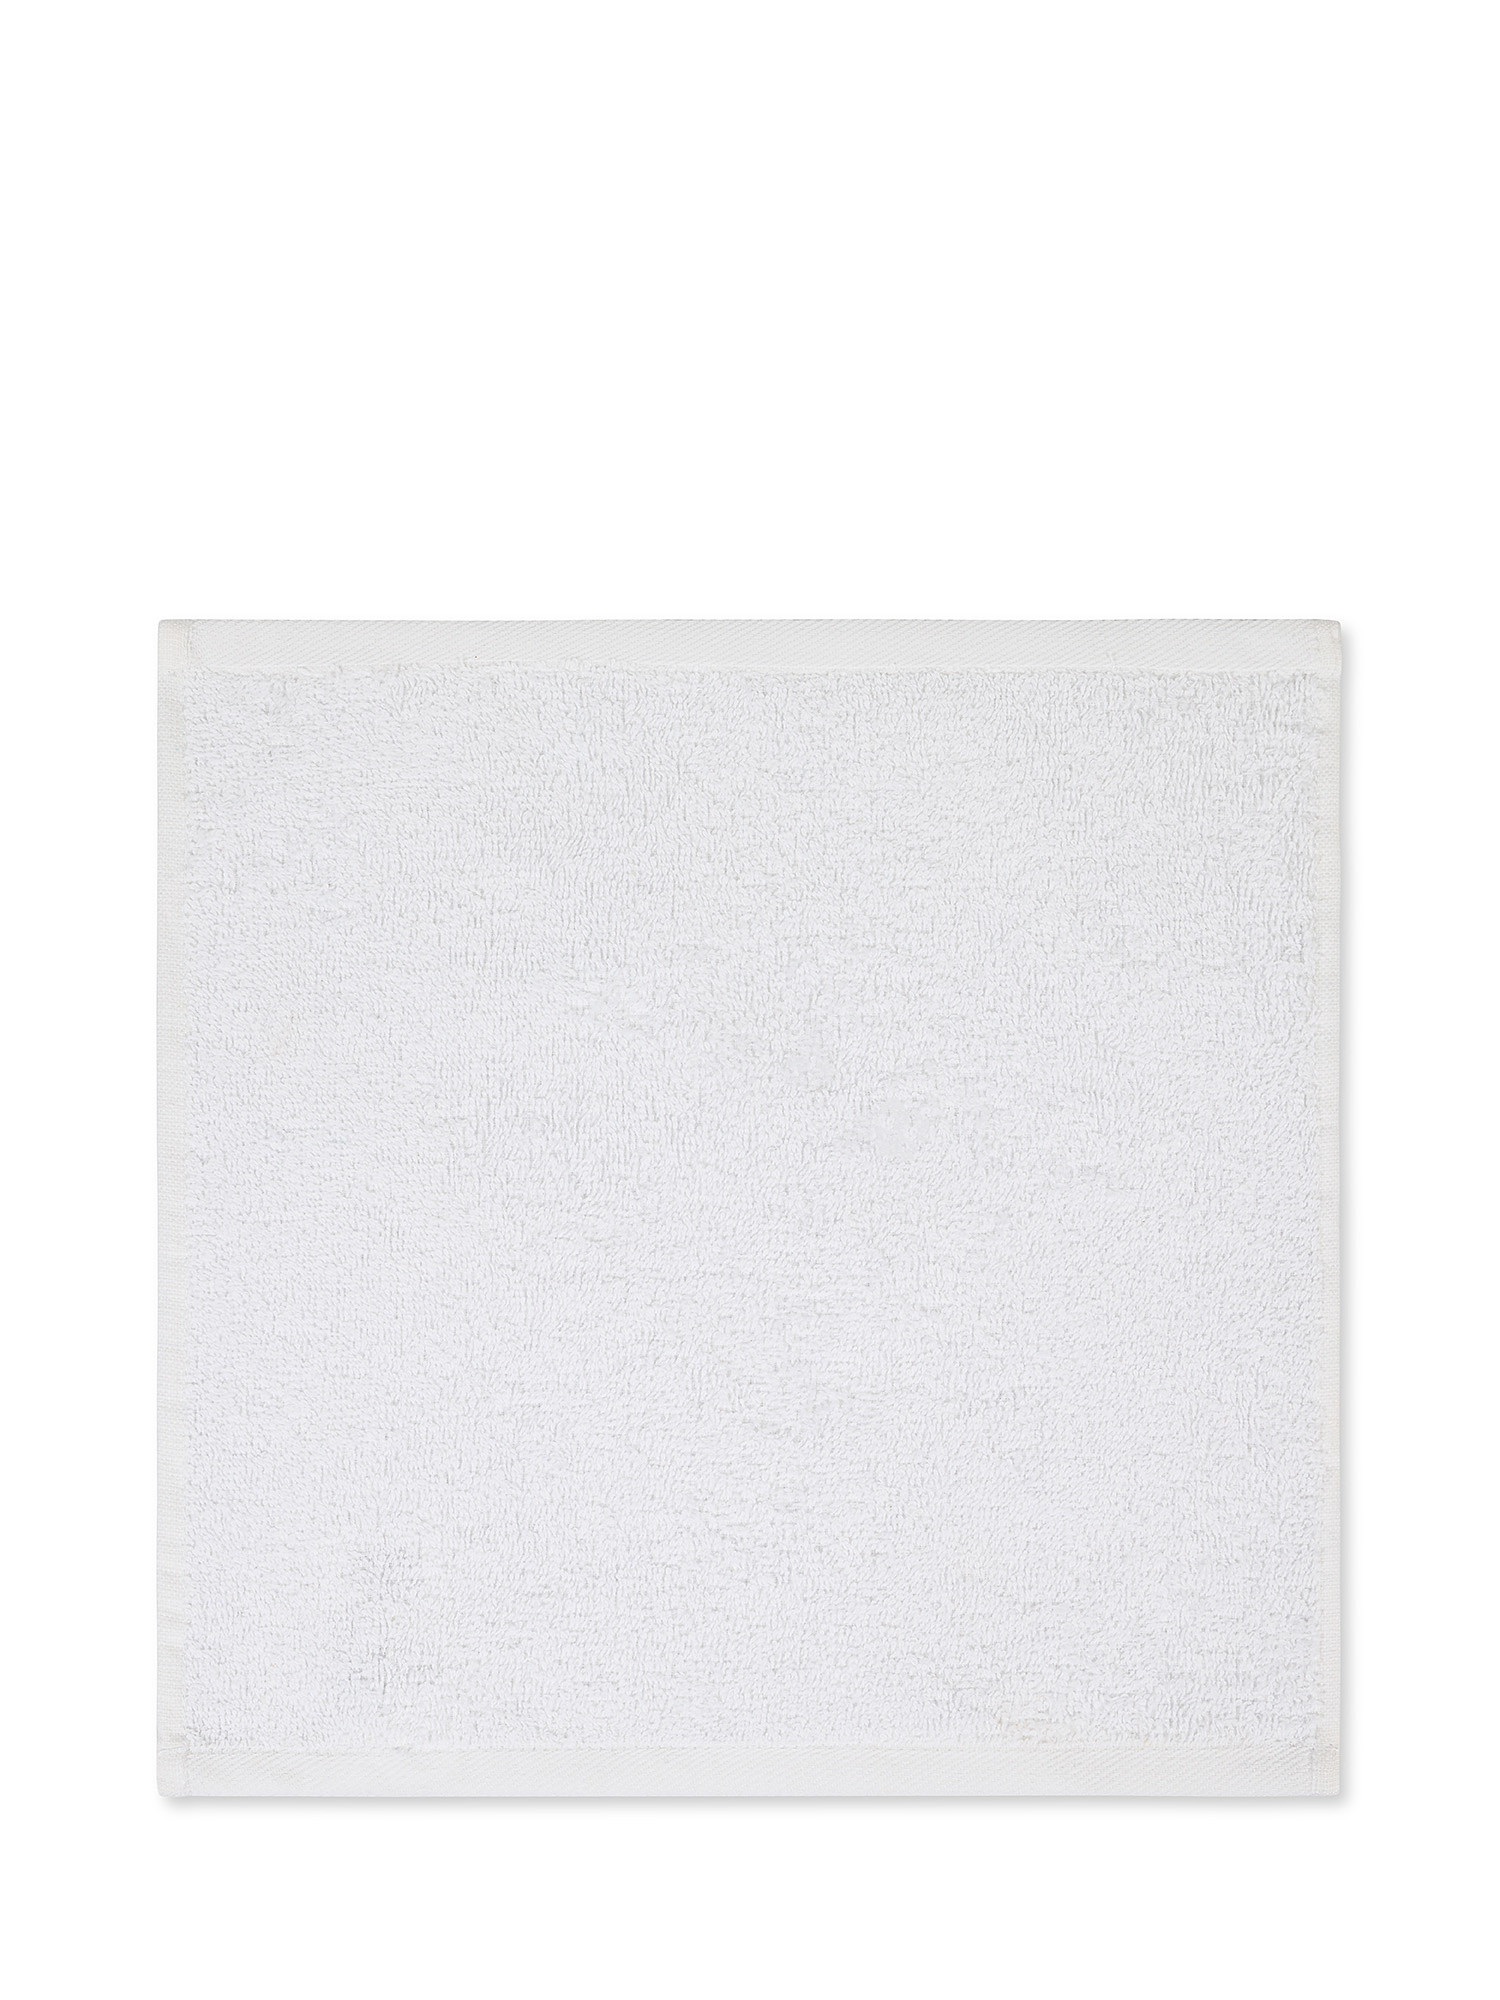 Lavetta 30X30 cm, Bianco, large image number 1